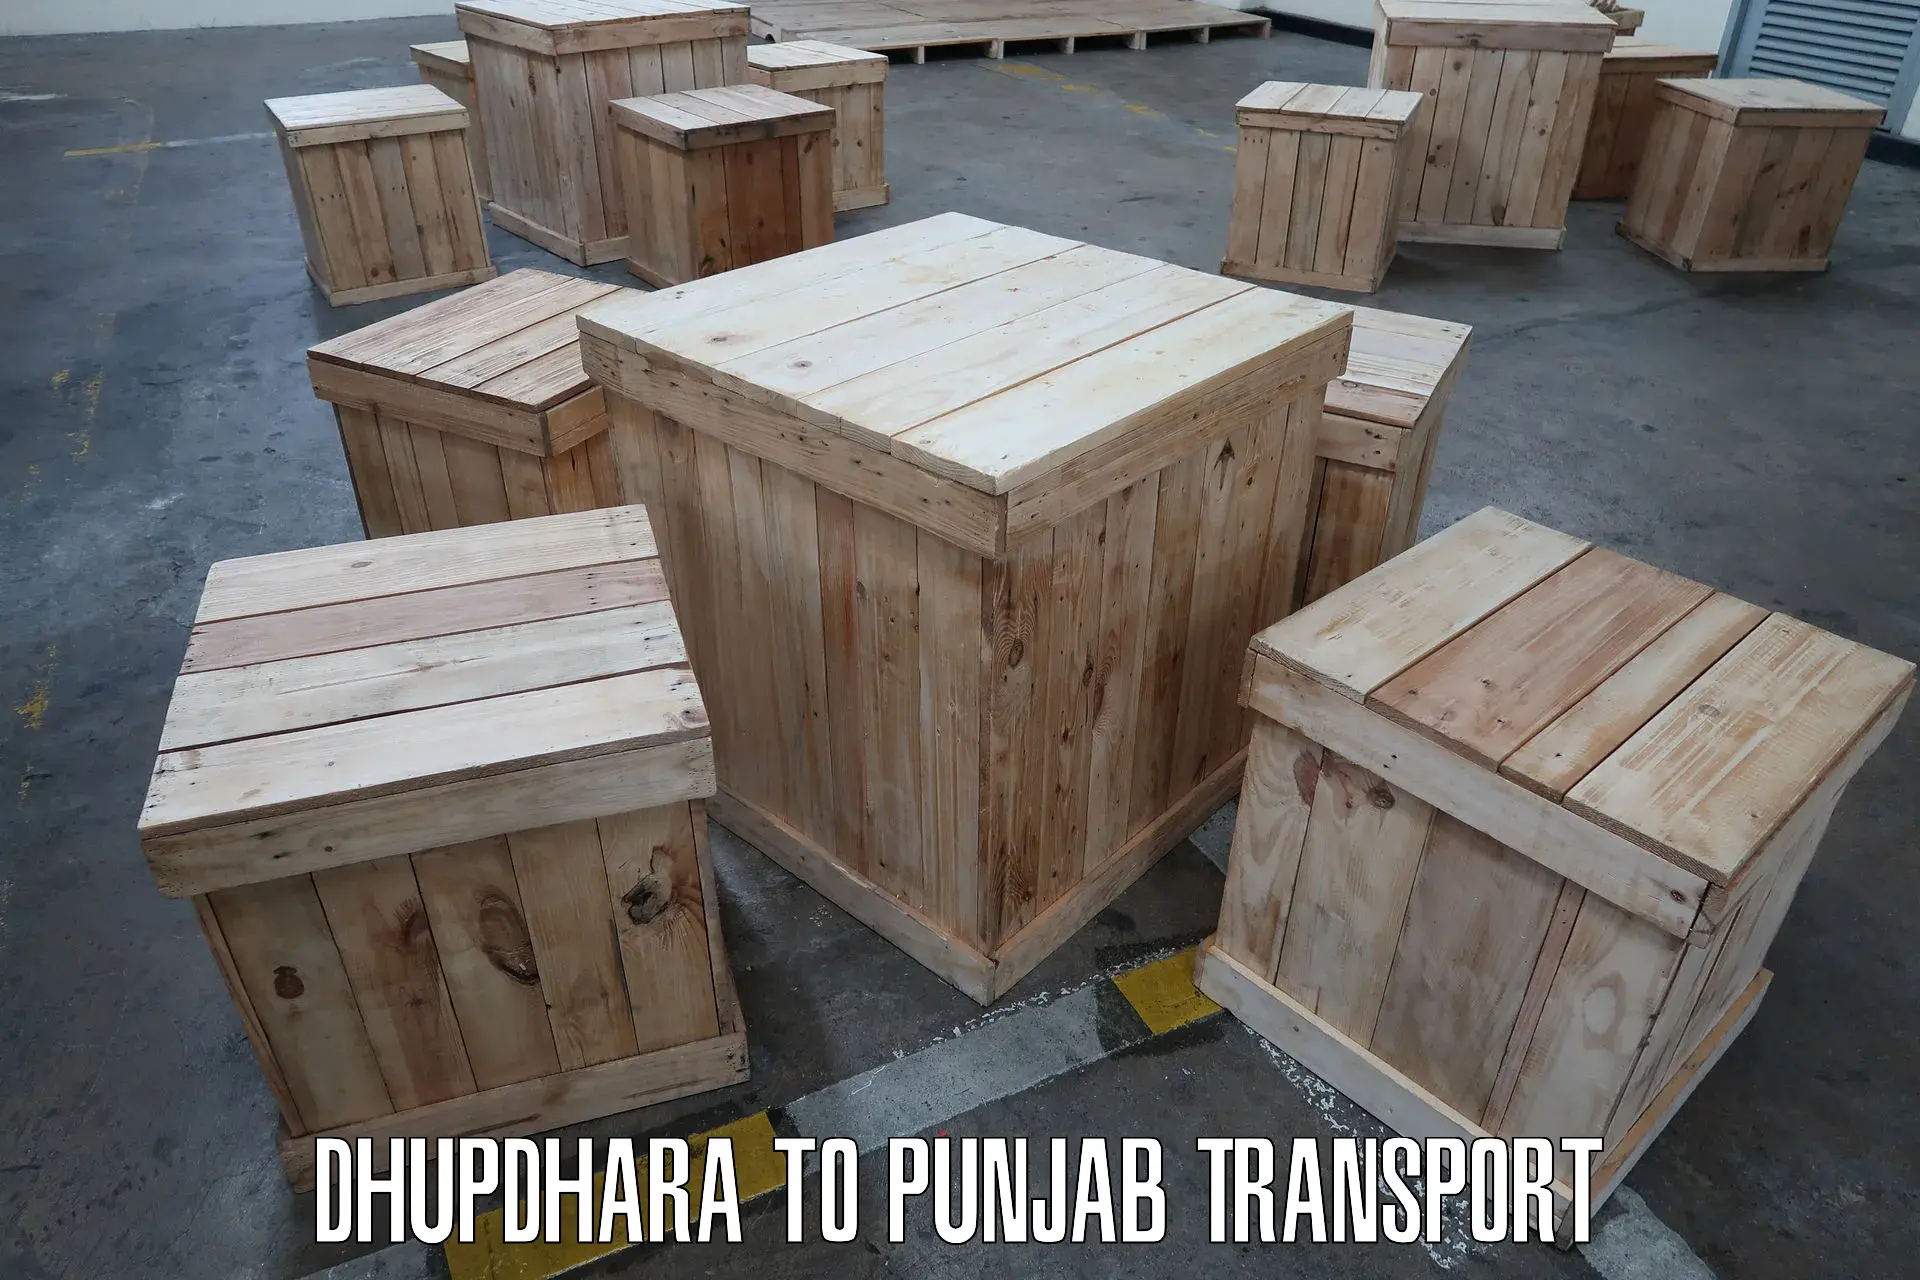 Truck transport companies in India Dhupdhara to Malerkotla